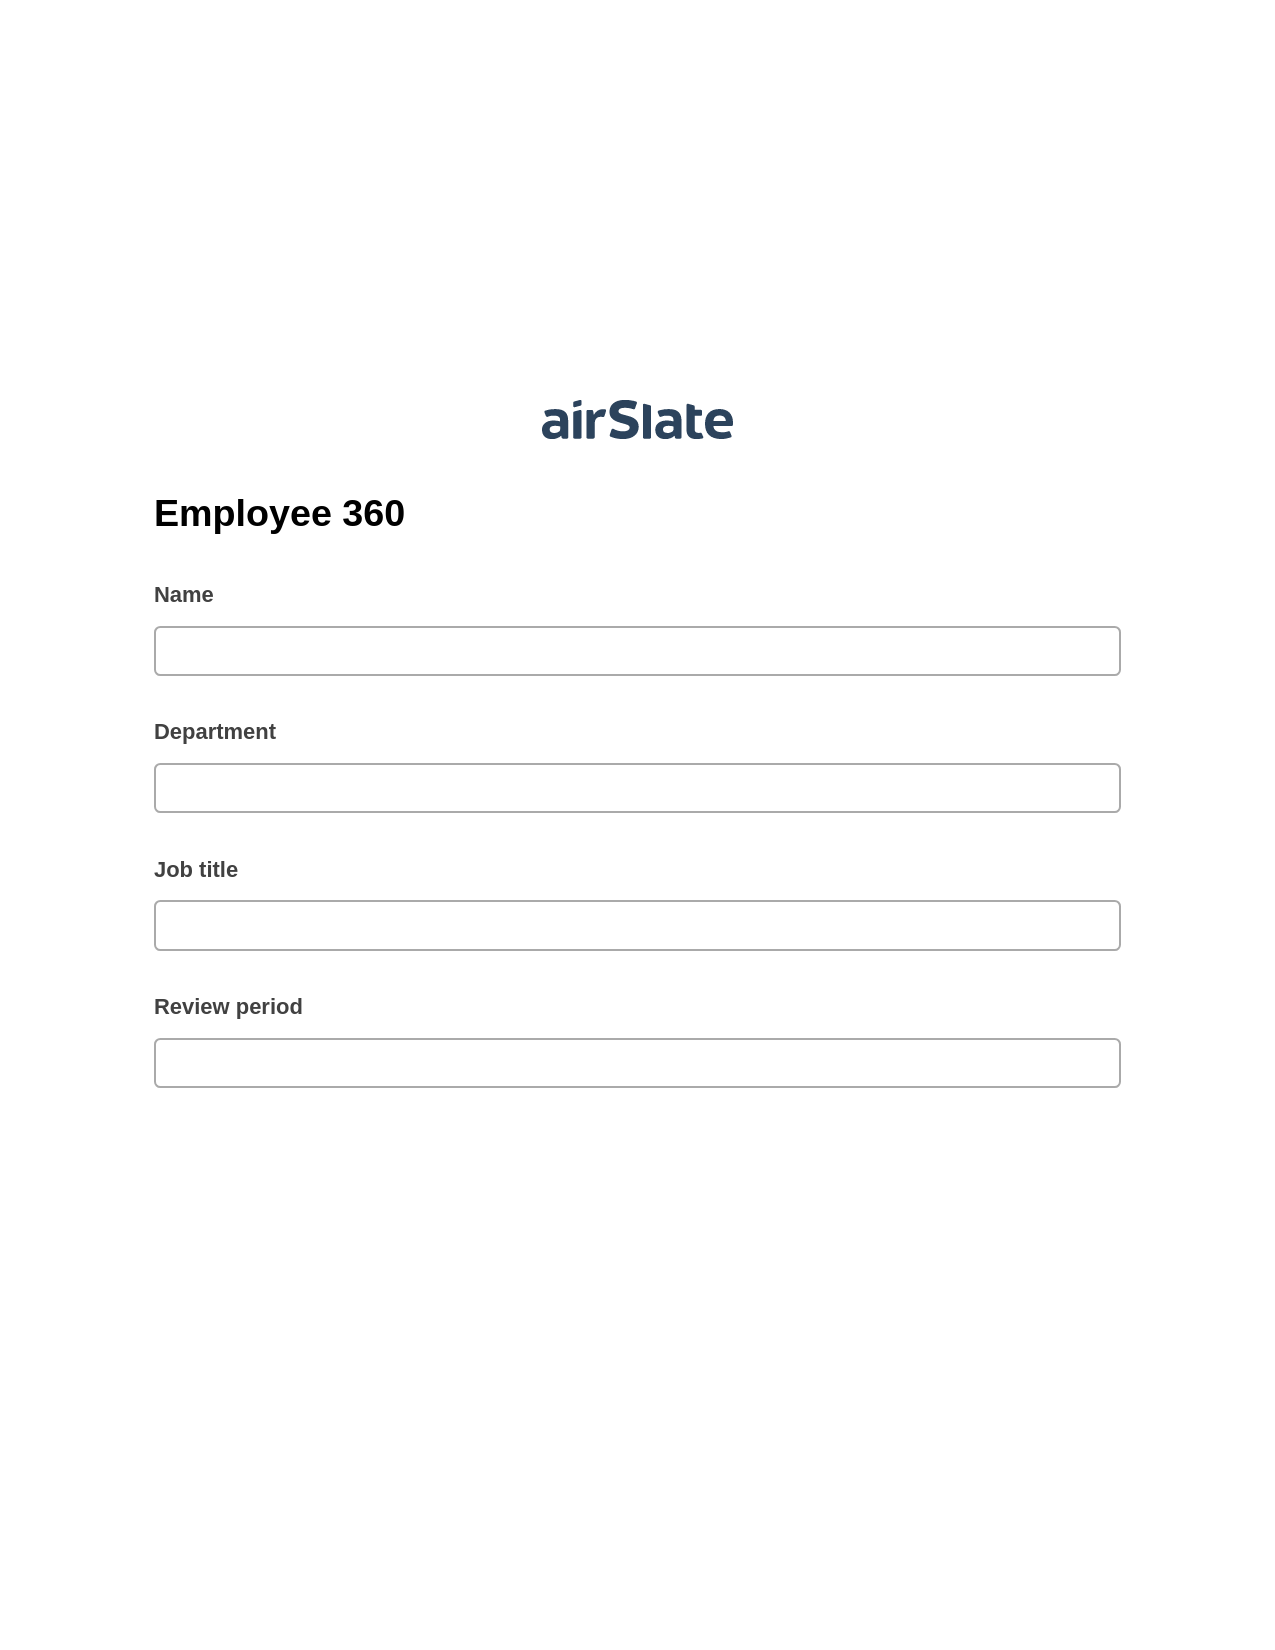 Multirole Employee 360 Pre-fill from Google Sheets Bot, Invoke Salesforce Process Bot, Archive to OneDrive Bot